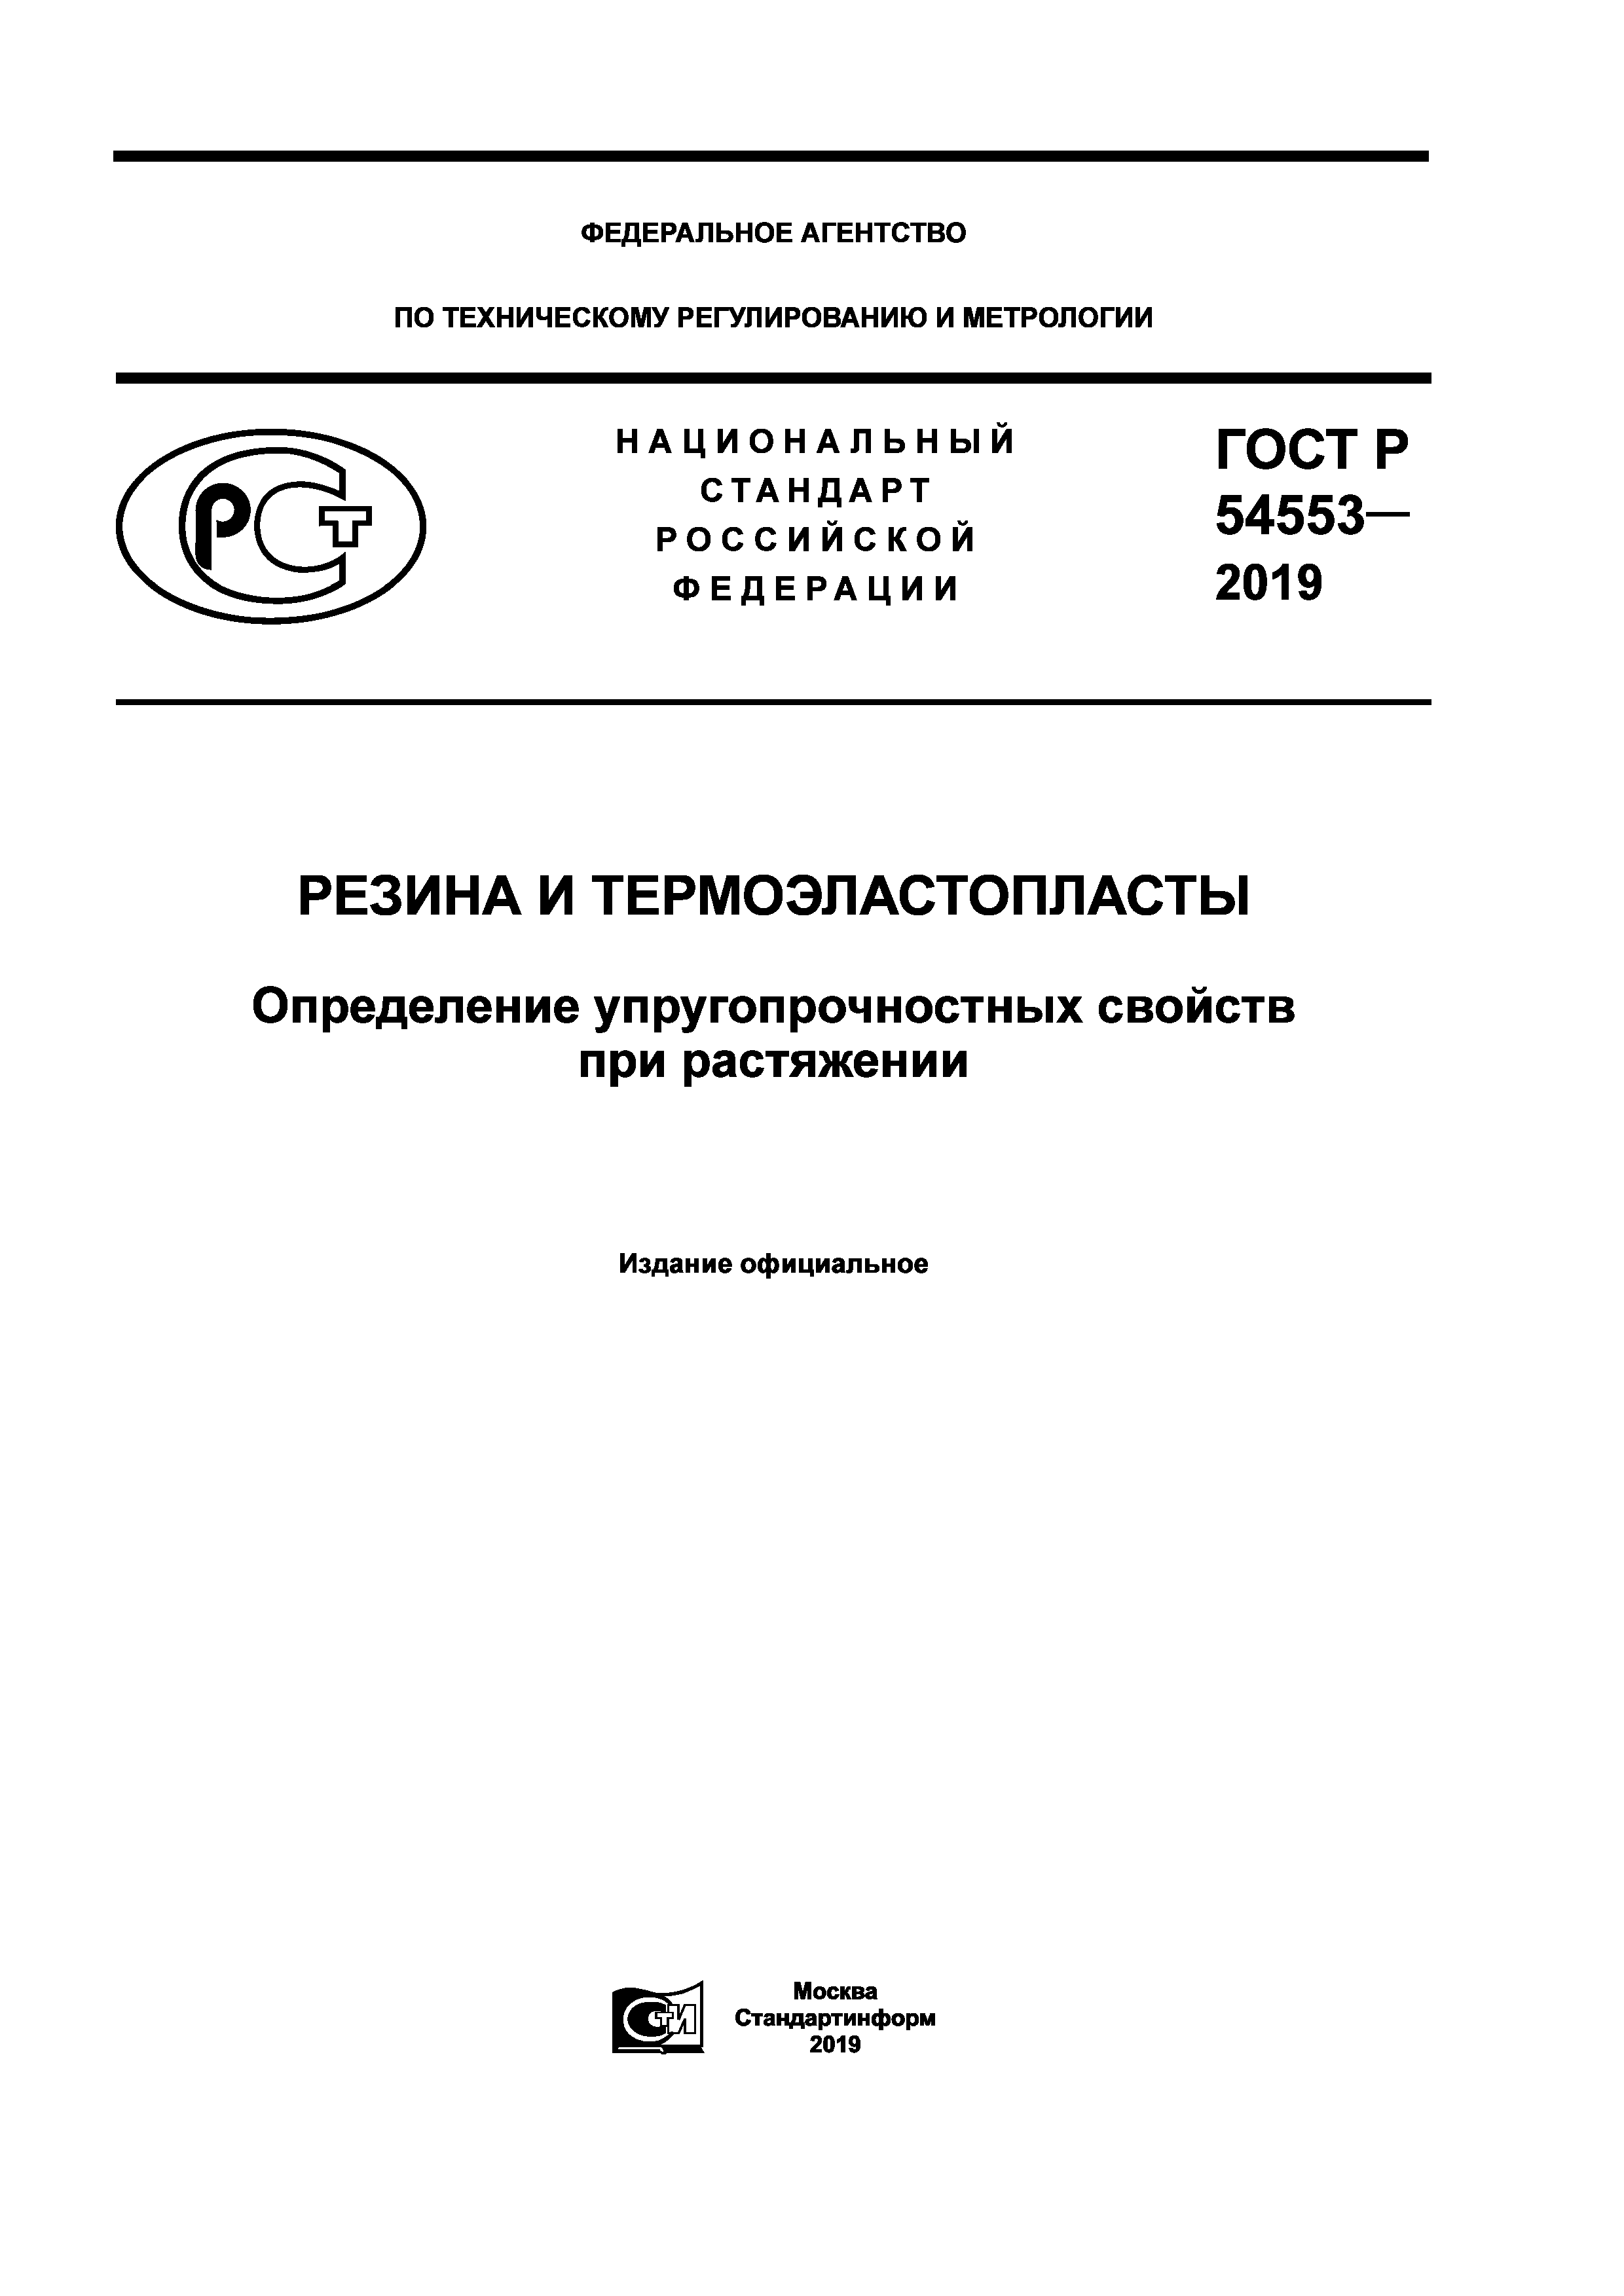 ГОСТ Р 54553-2019